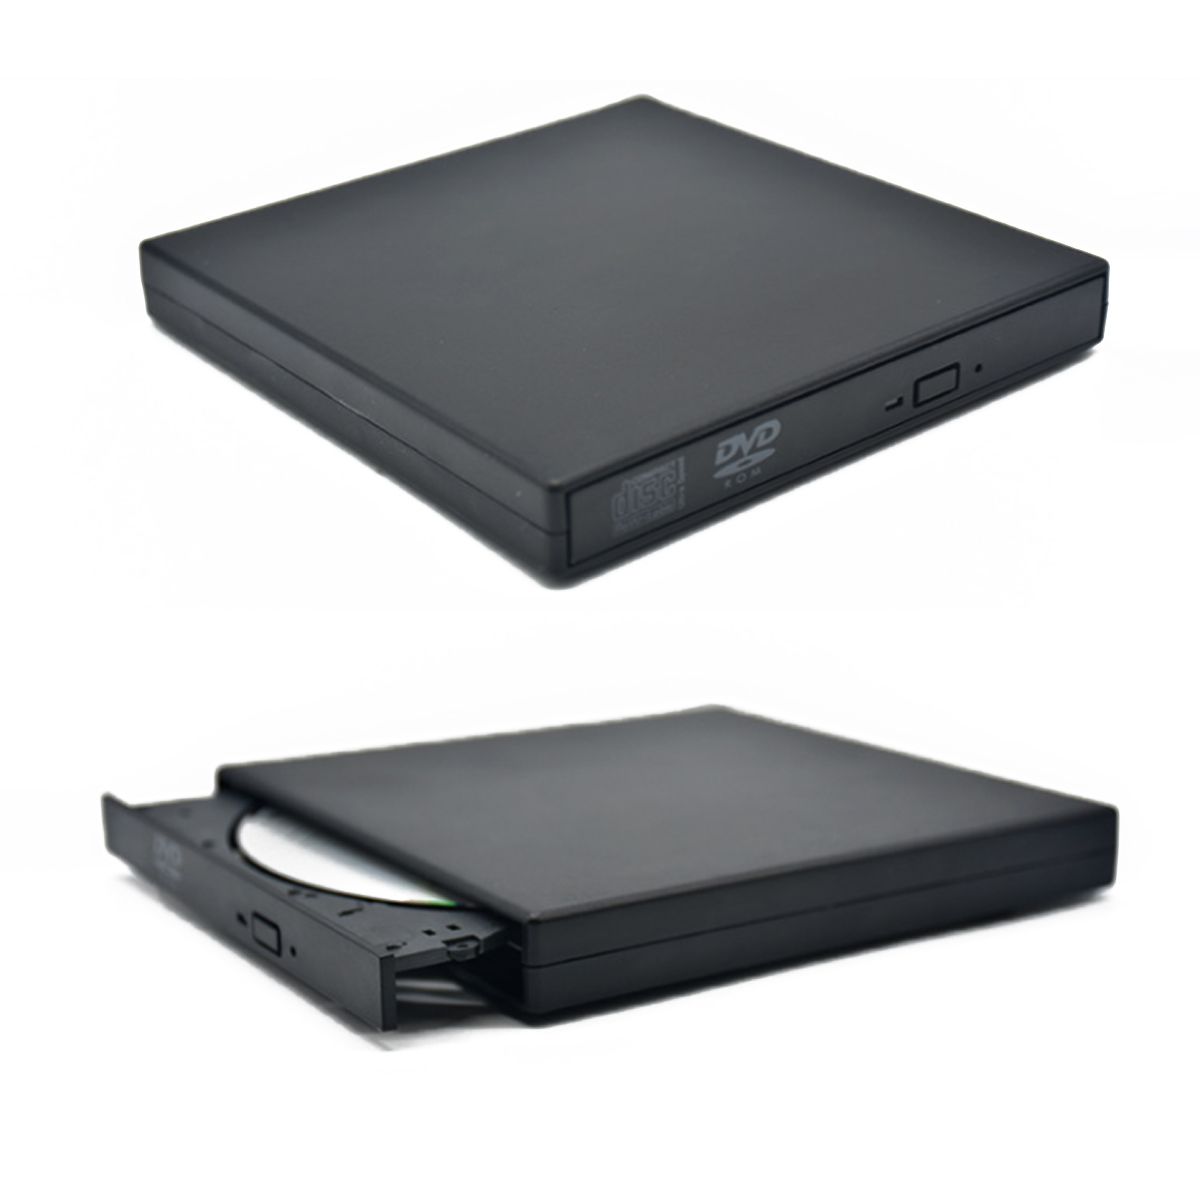 USB-20-External-Optical-Drive-DVD-COMBO-Player-for-PC-Notebook-1433032